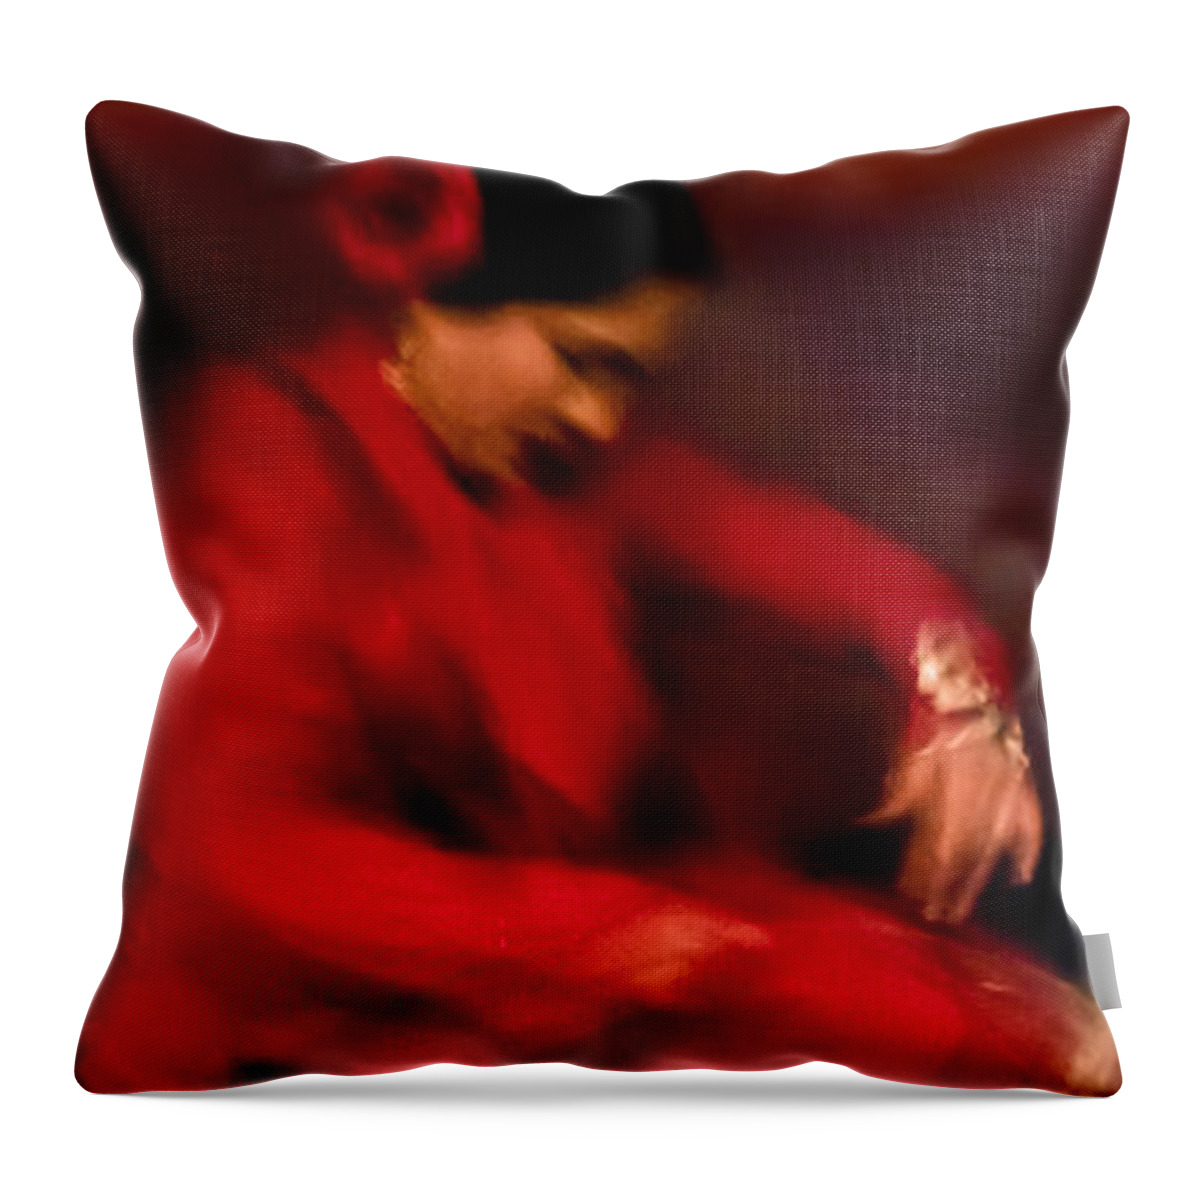 Abanicos Throw Pillow featuring the photograph Flamenco Series 1 by Catherine Sobredo